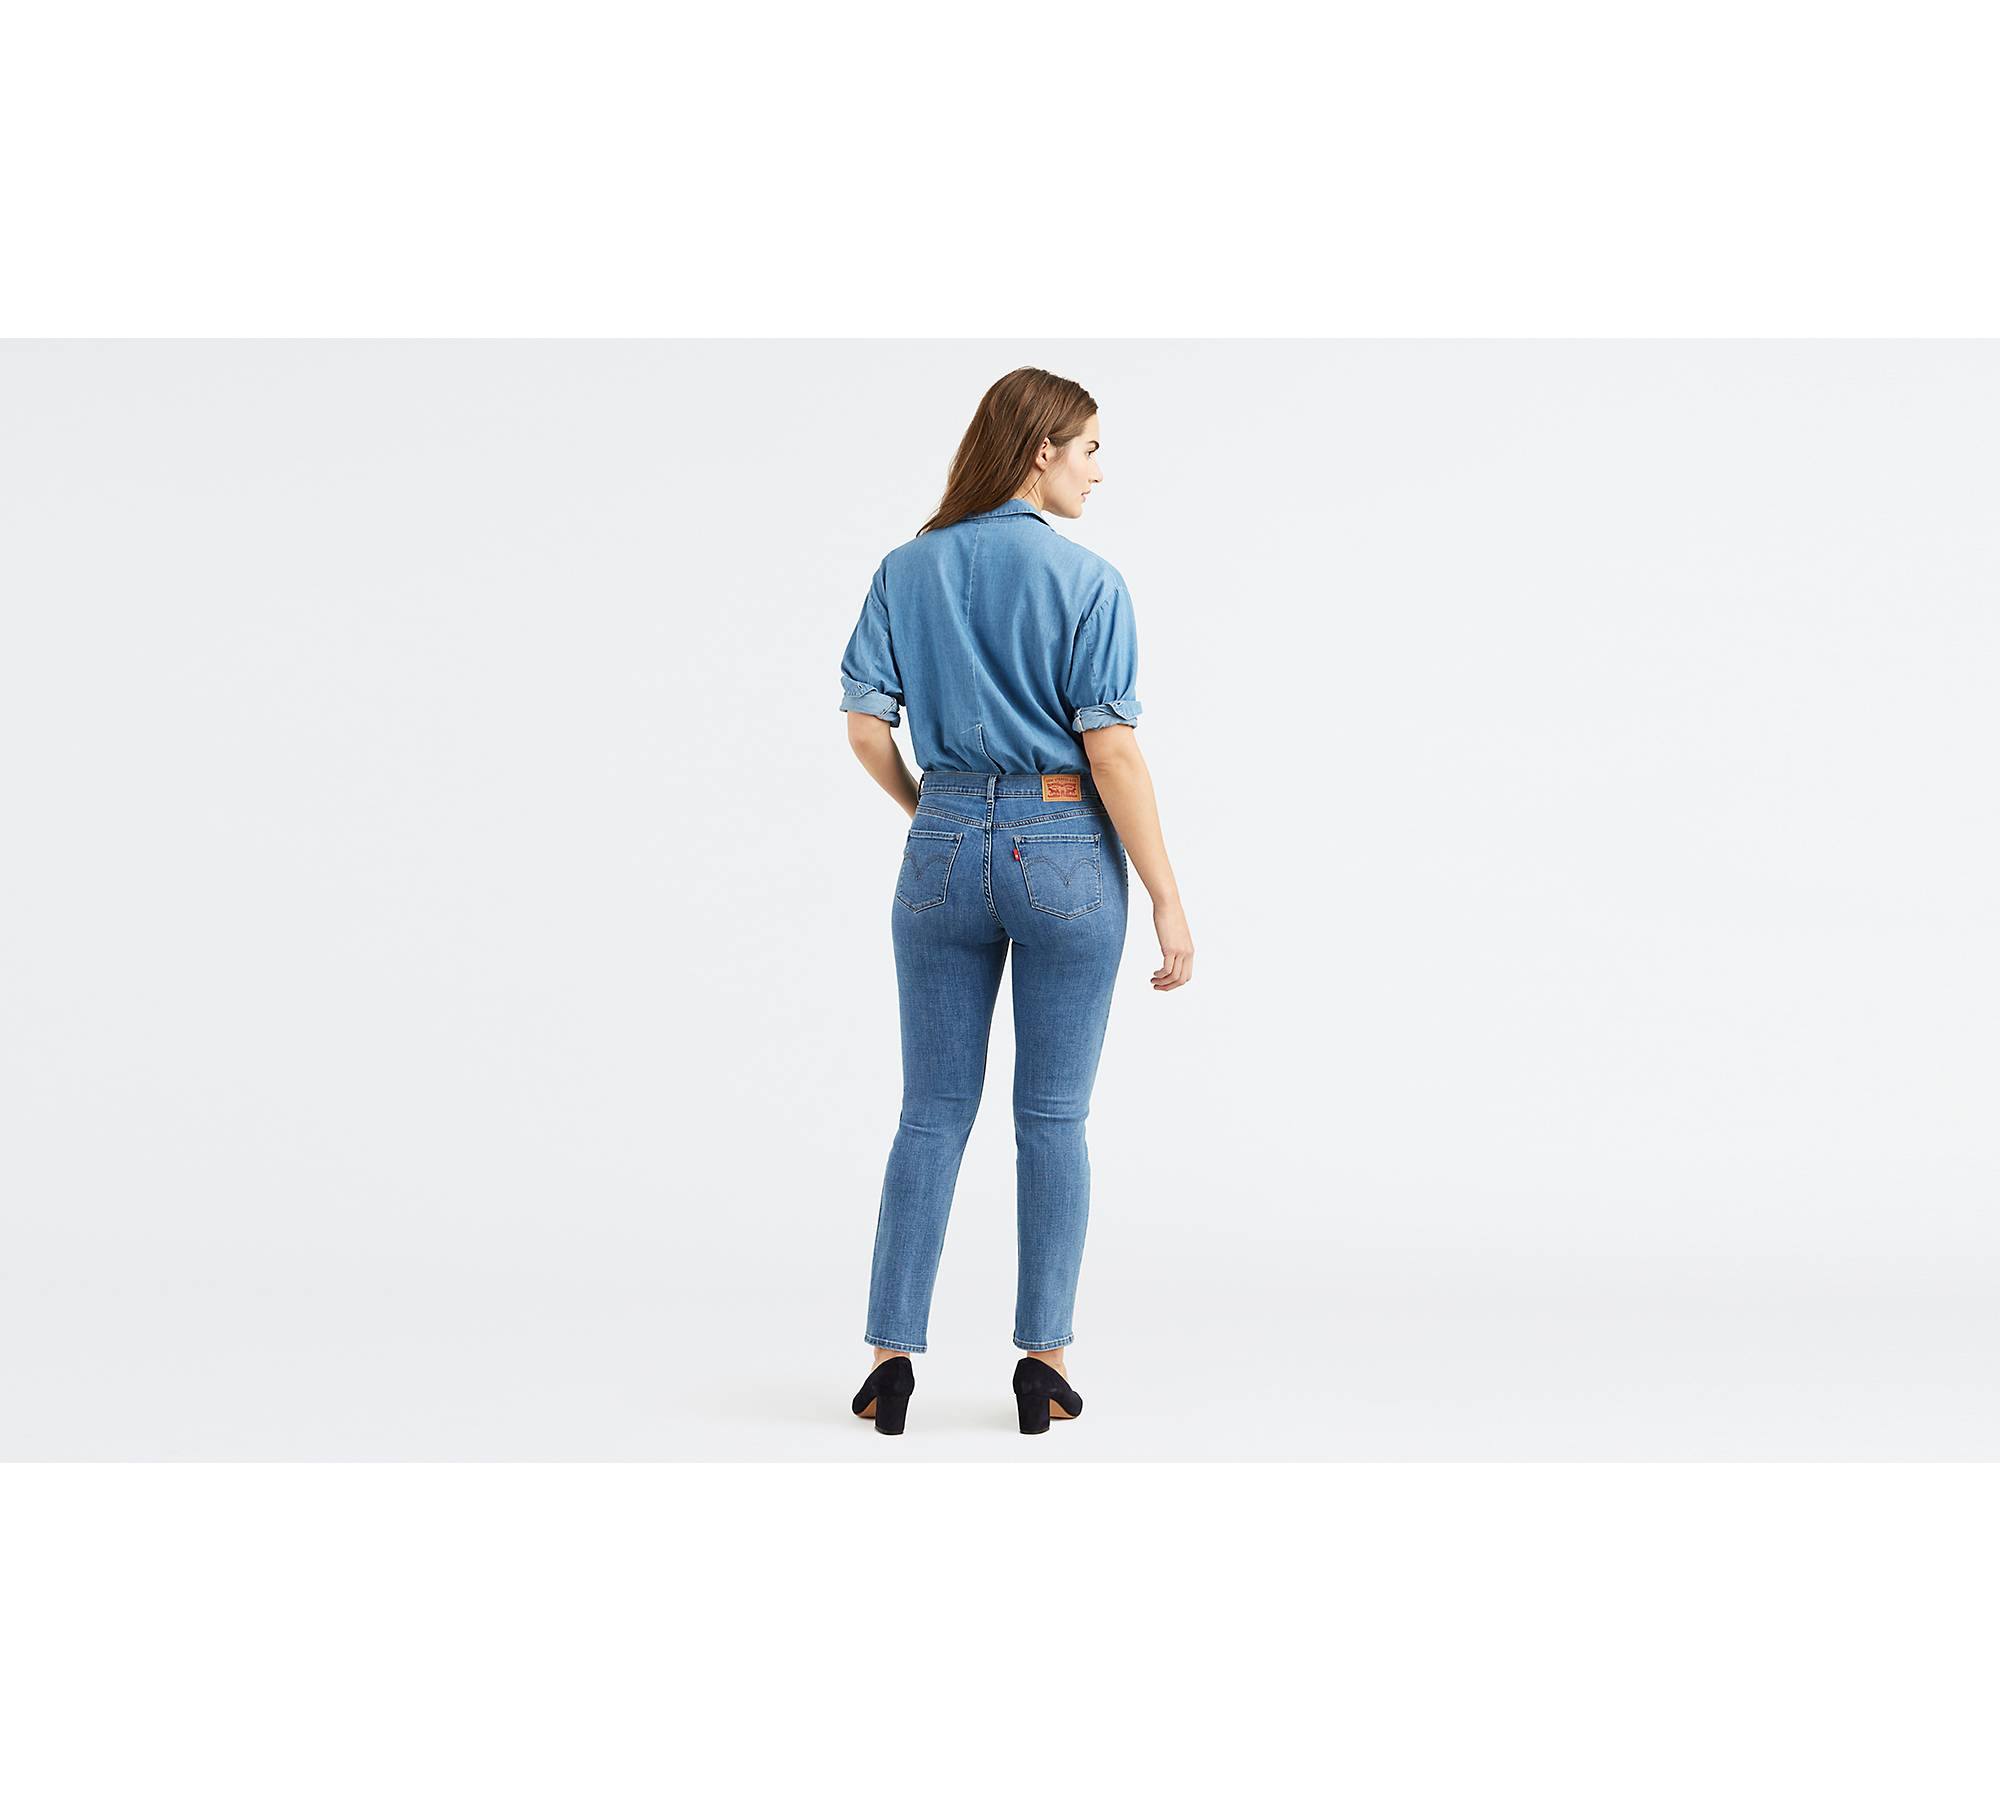 Classic Straight Fit Women's Jeans - Medium Wash